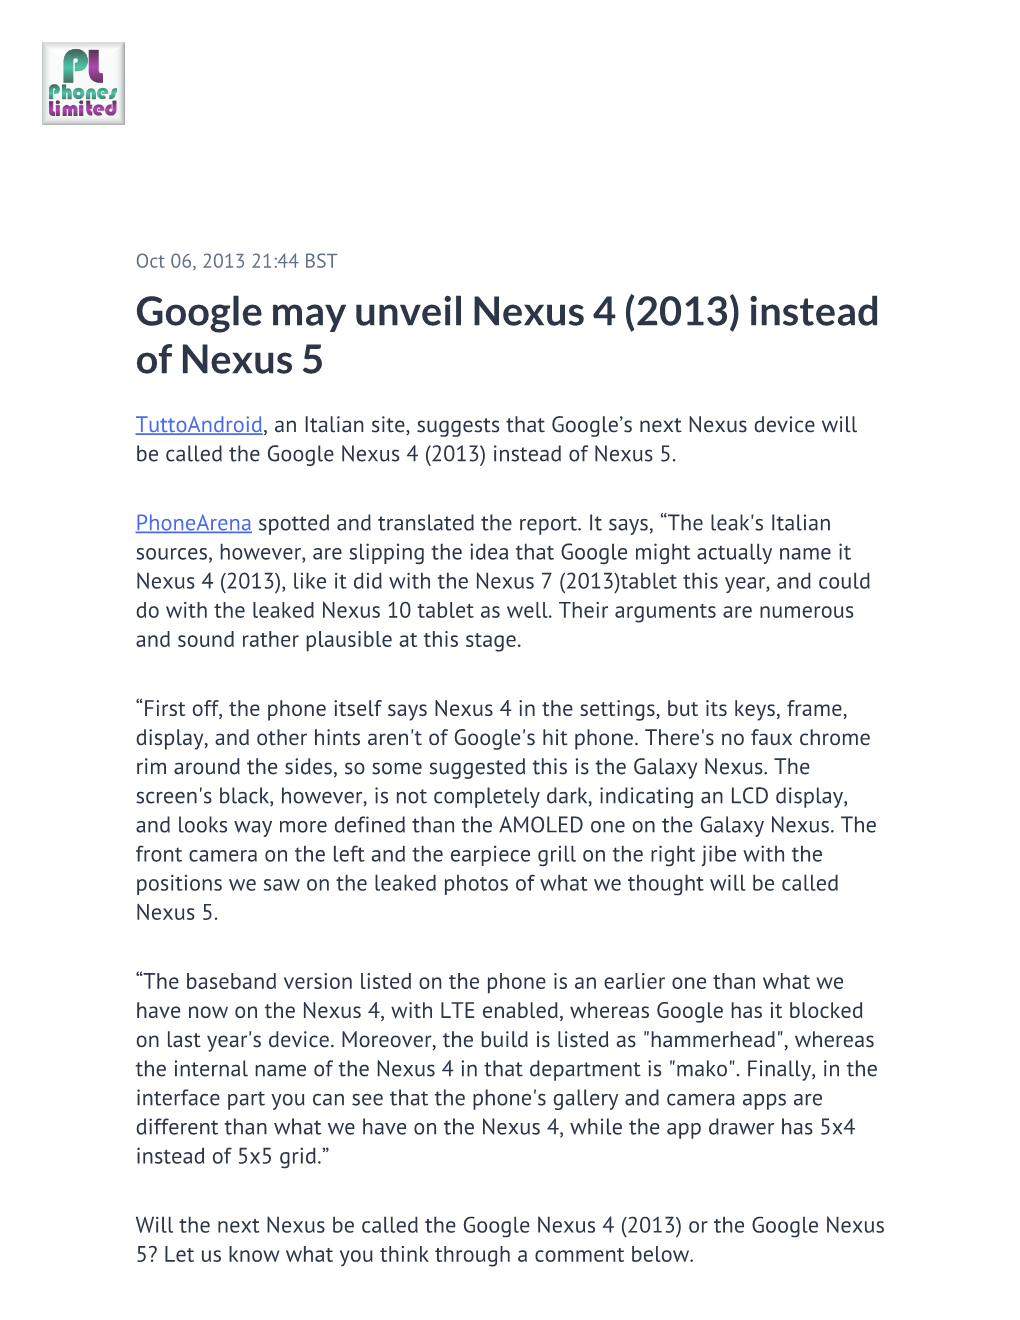 Google May Unveil Nexus 4 (2013) Instead of Nexus 5